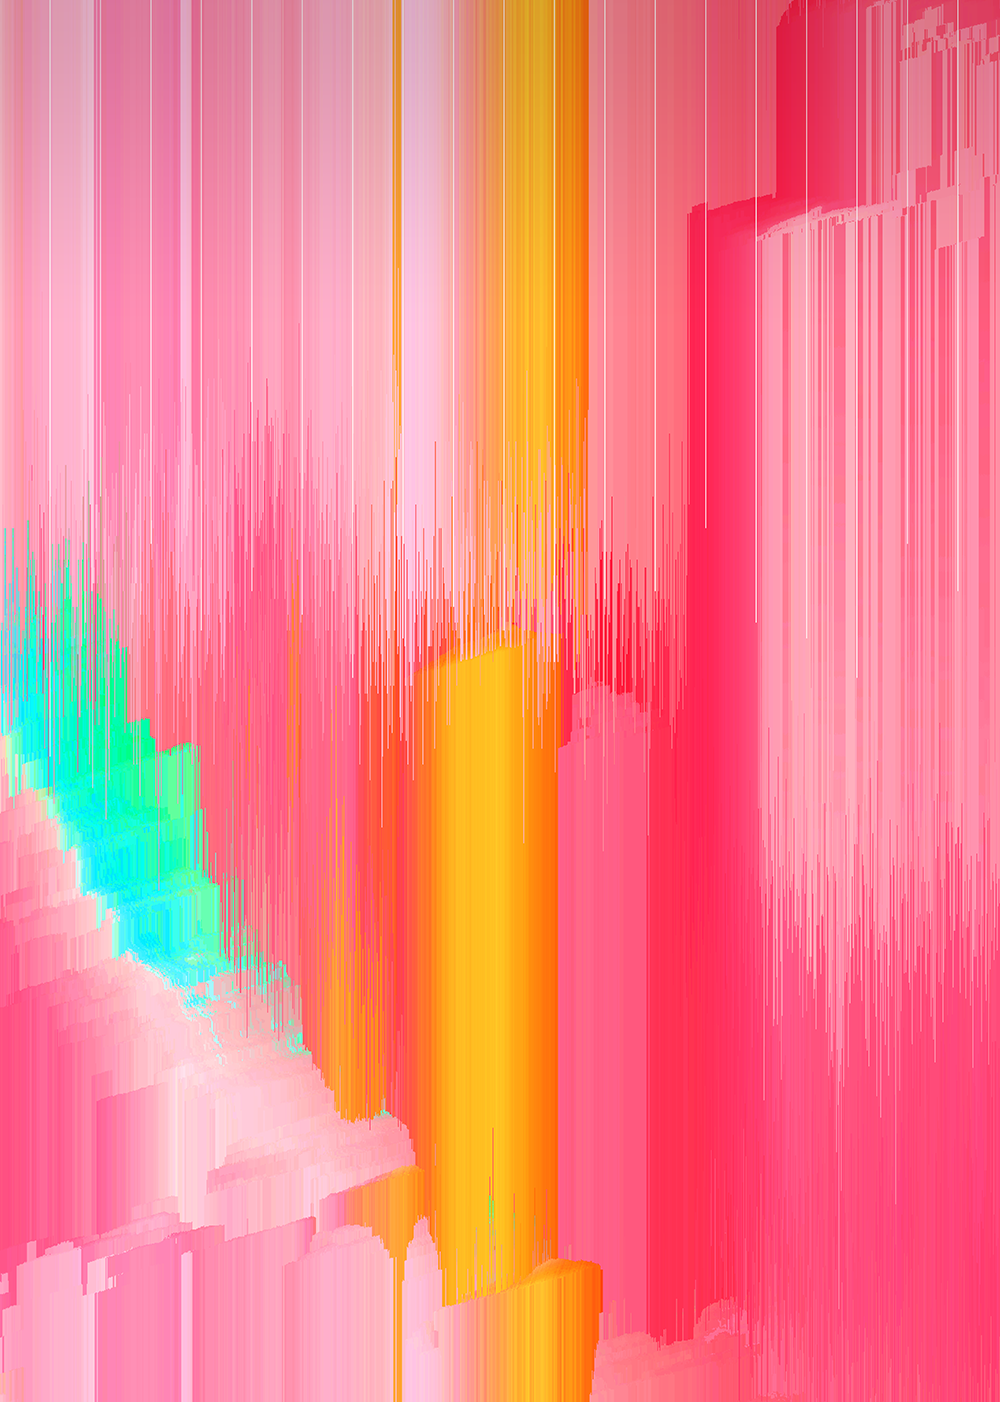 Pixel art 8 bit Glitch generative abstract ice fire